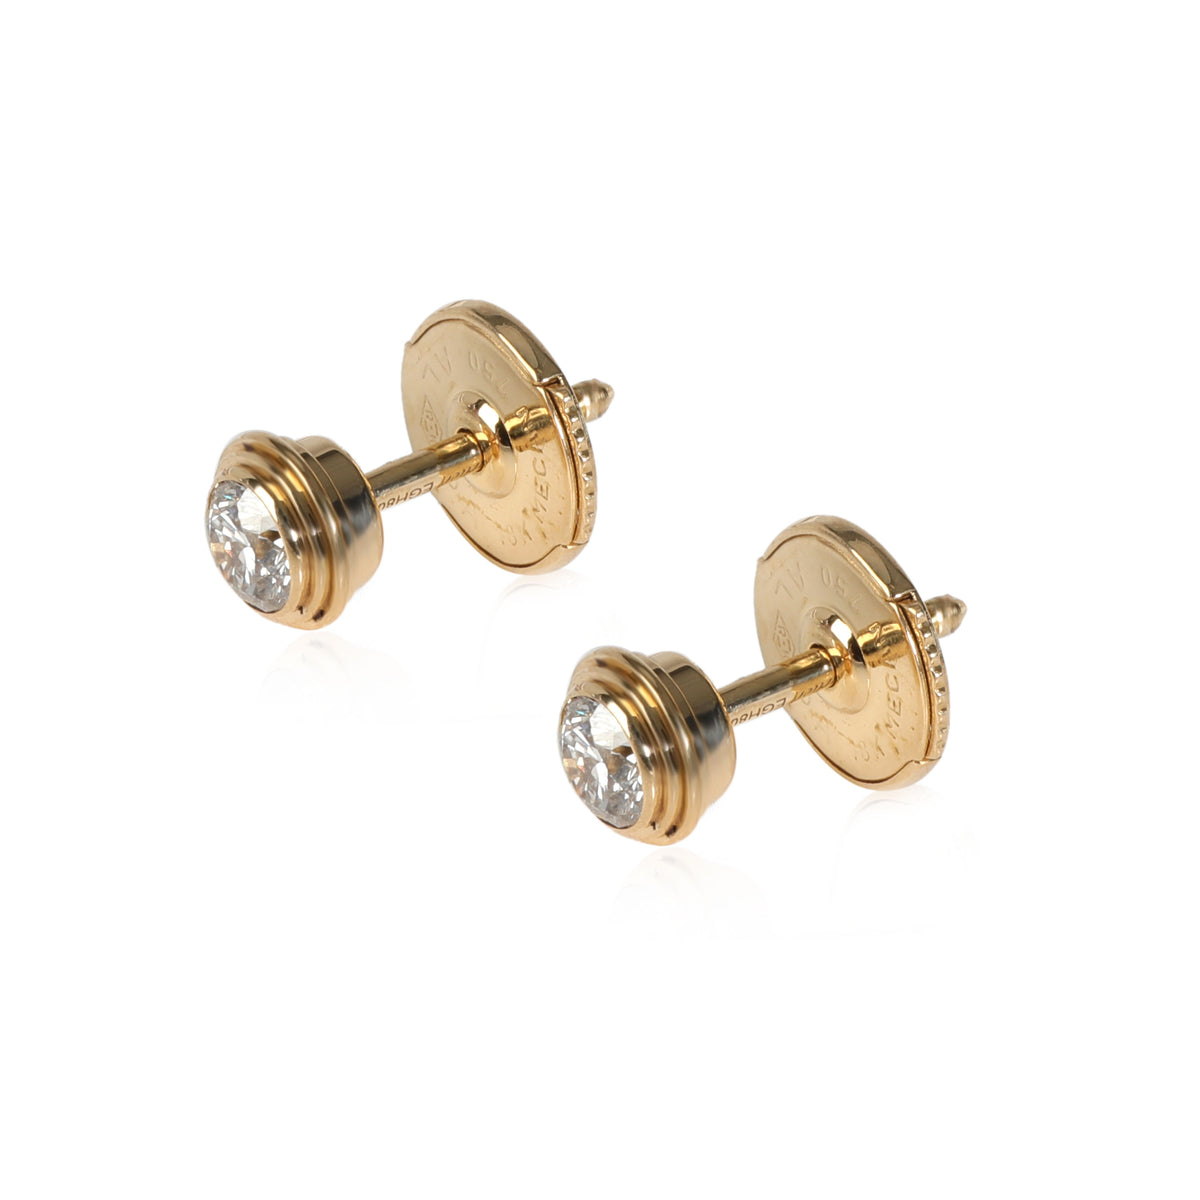 Cartier Diamants Légers Diamond Stud Earrings in 18k Yellow Gold 0.26 CTW